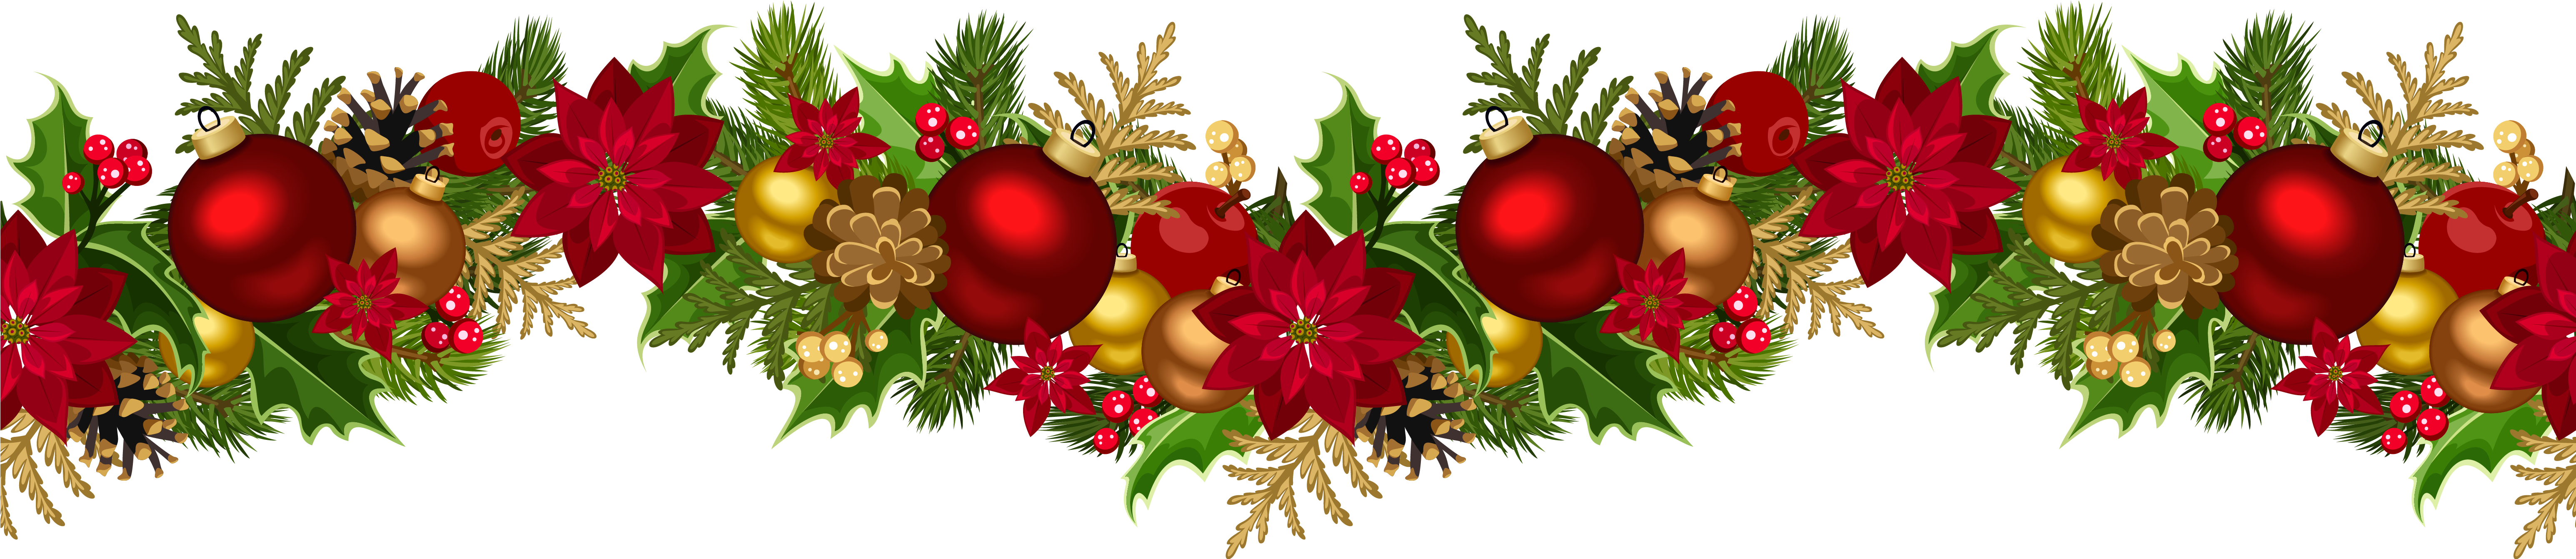 Download Christmas Decorative Garland Png Clip Art Image - Christmas ...